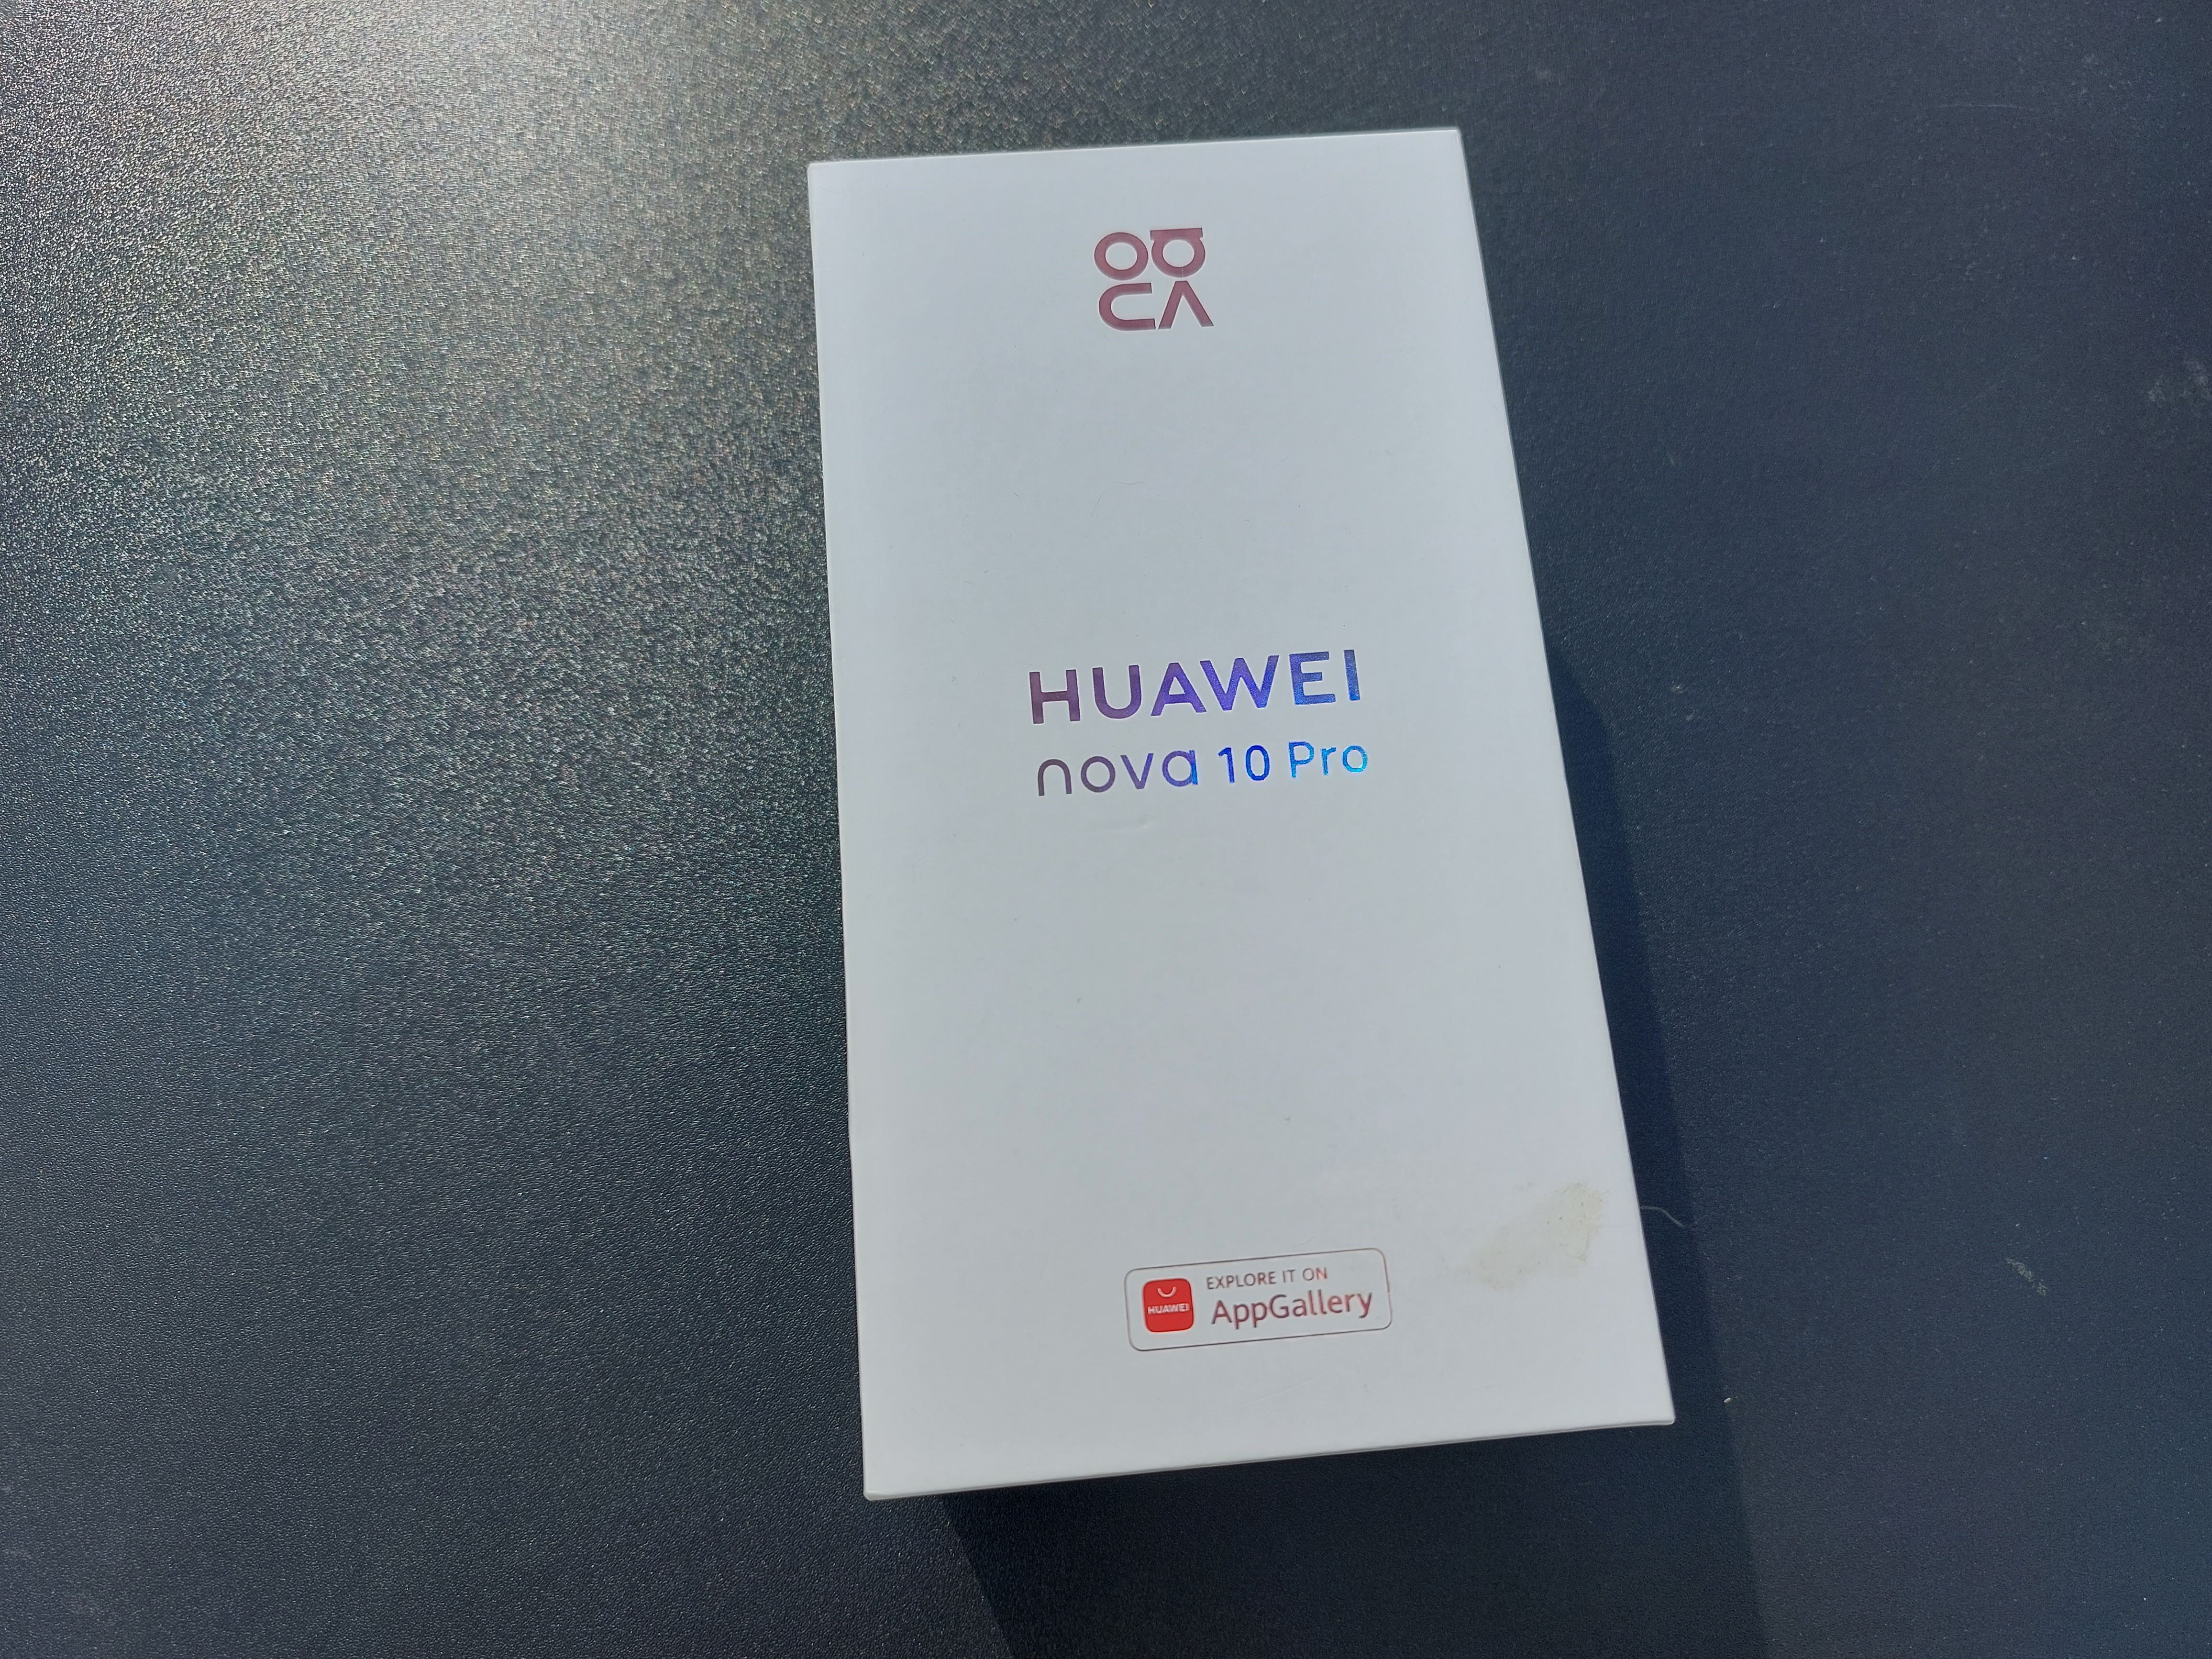 Huawei Nova 10 Pro box